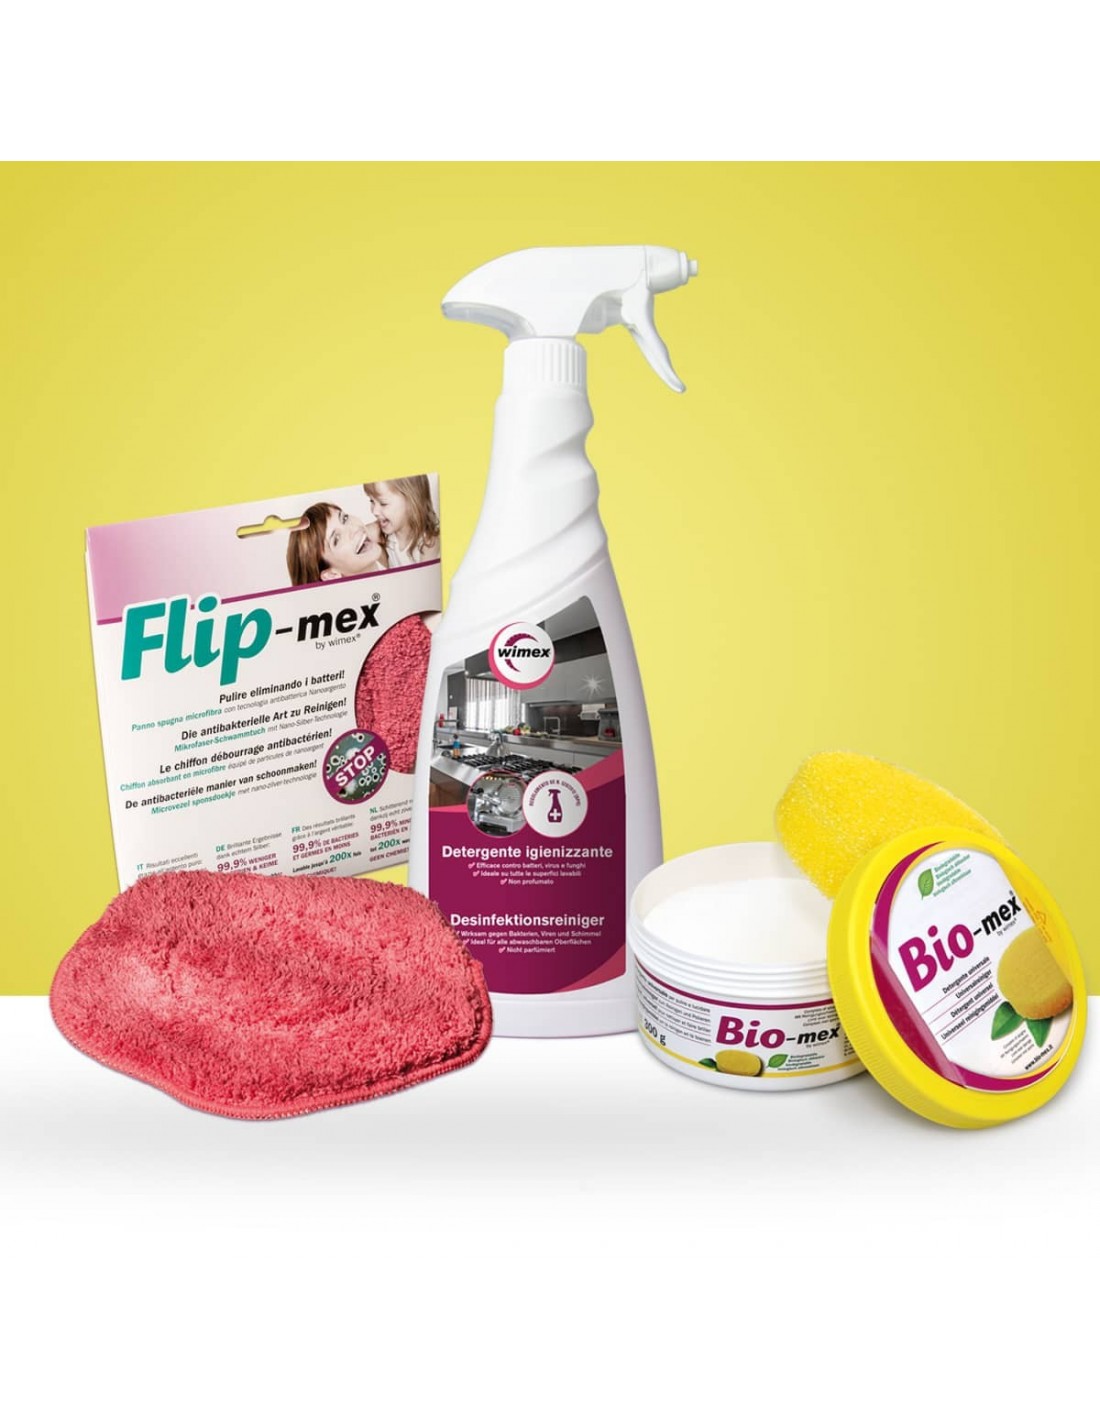 Kit pulito sicuro: Bio-mex pasta pulente, panno Flip-mex